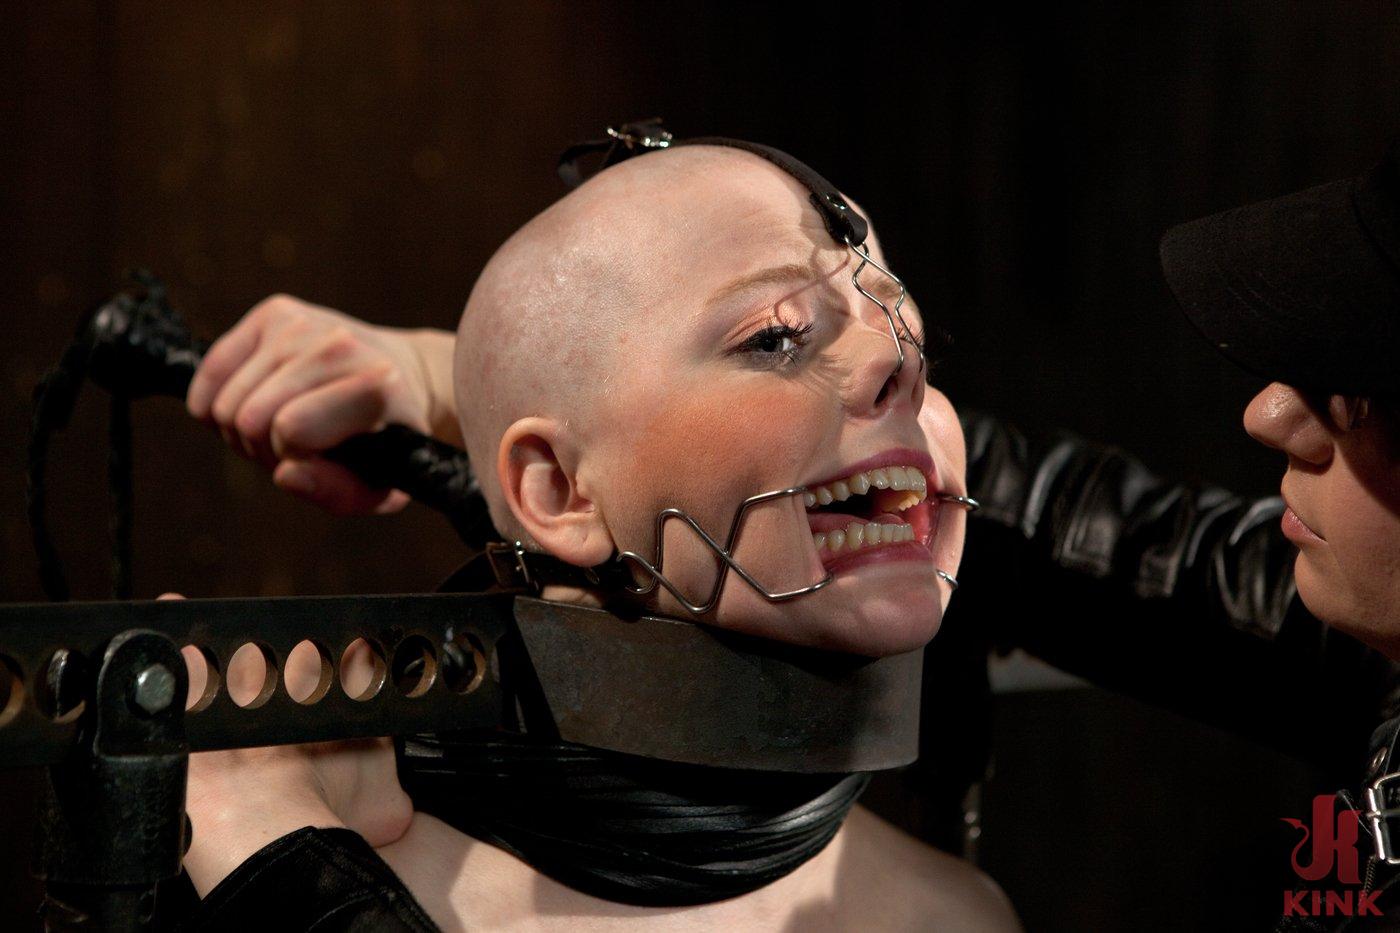 Forced Sex Head Shave - Bdsm Slave Head Shaving Punishment >> Expiring Desires, Clockwork ...